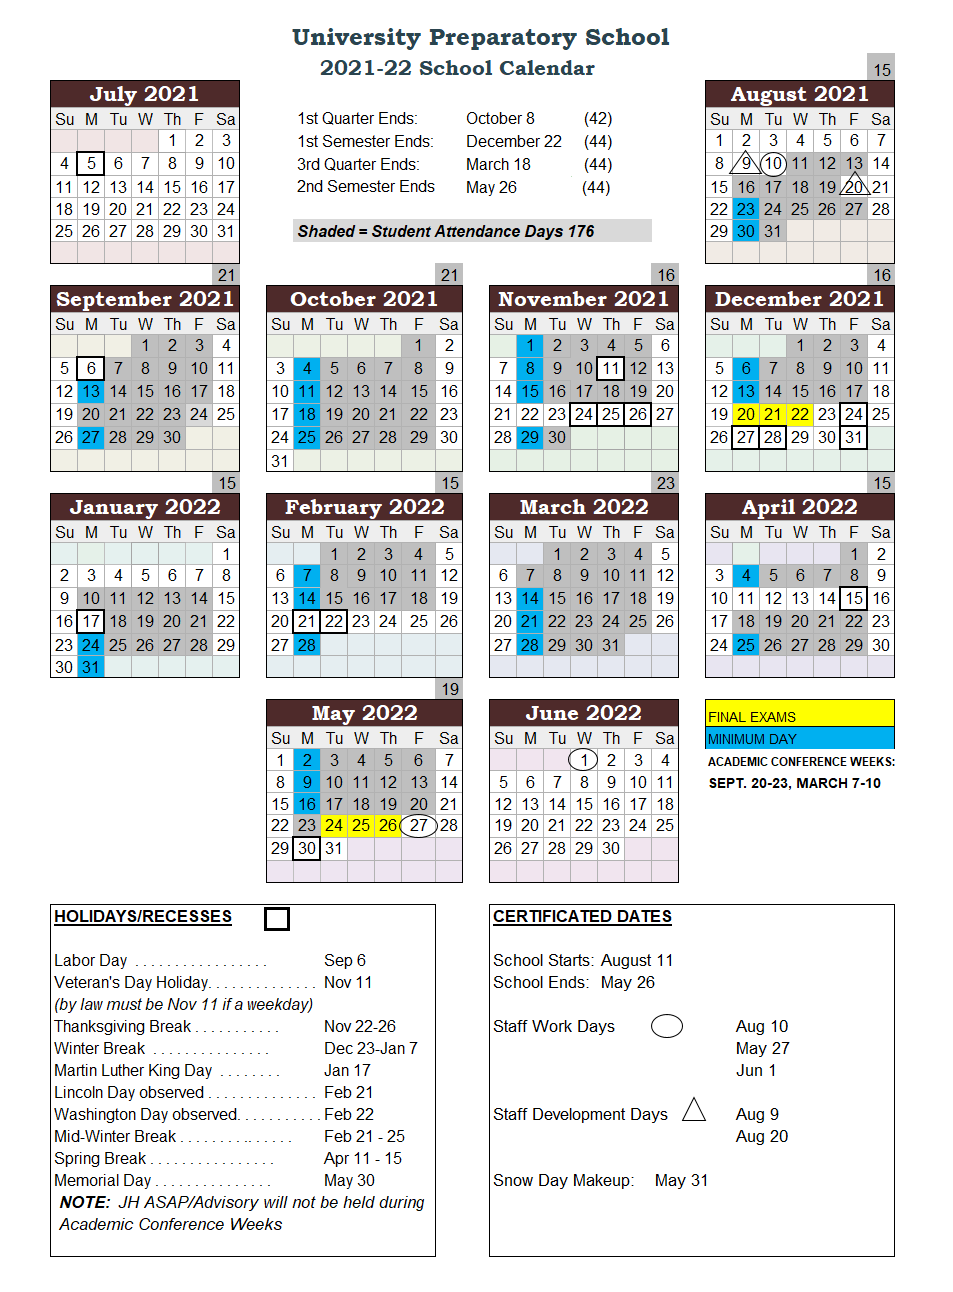 U-Prep 2021-22 Academic Calendar